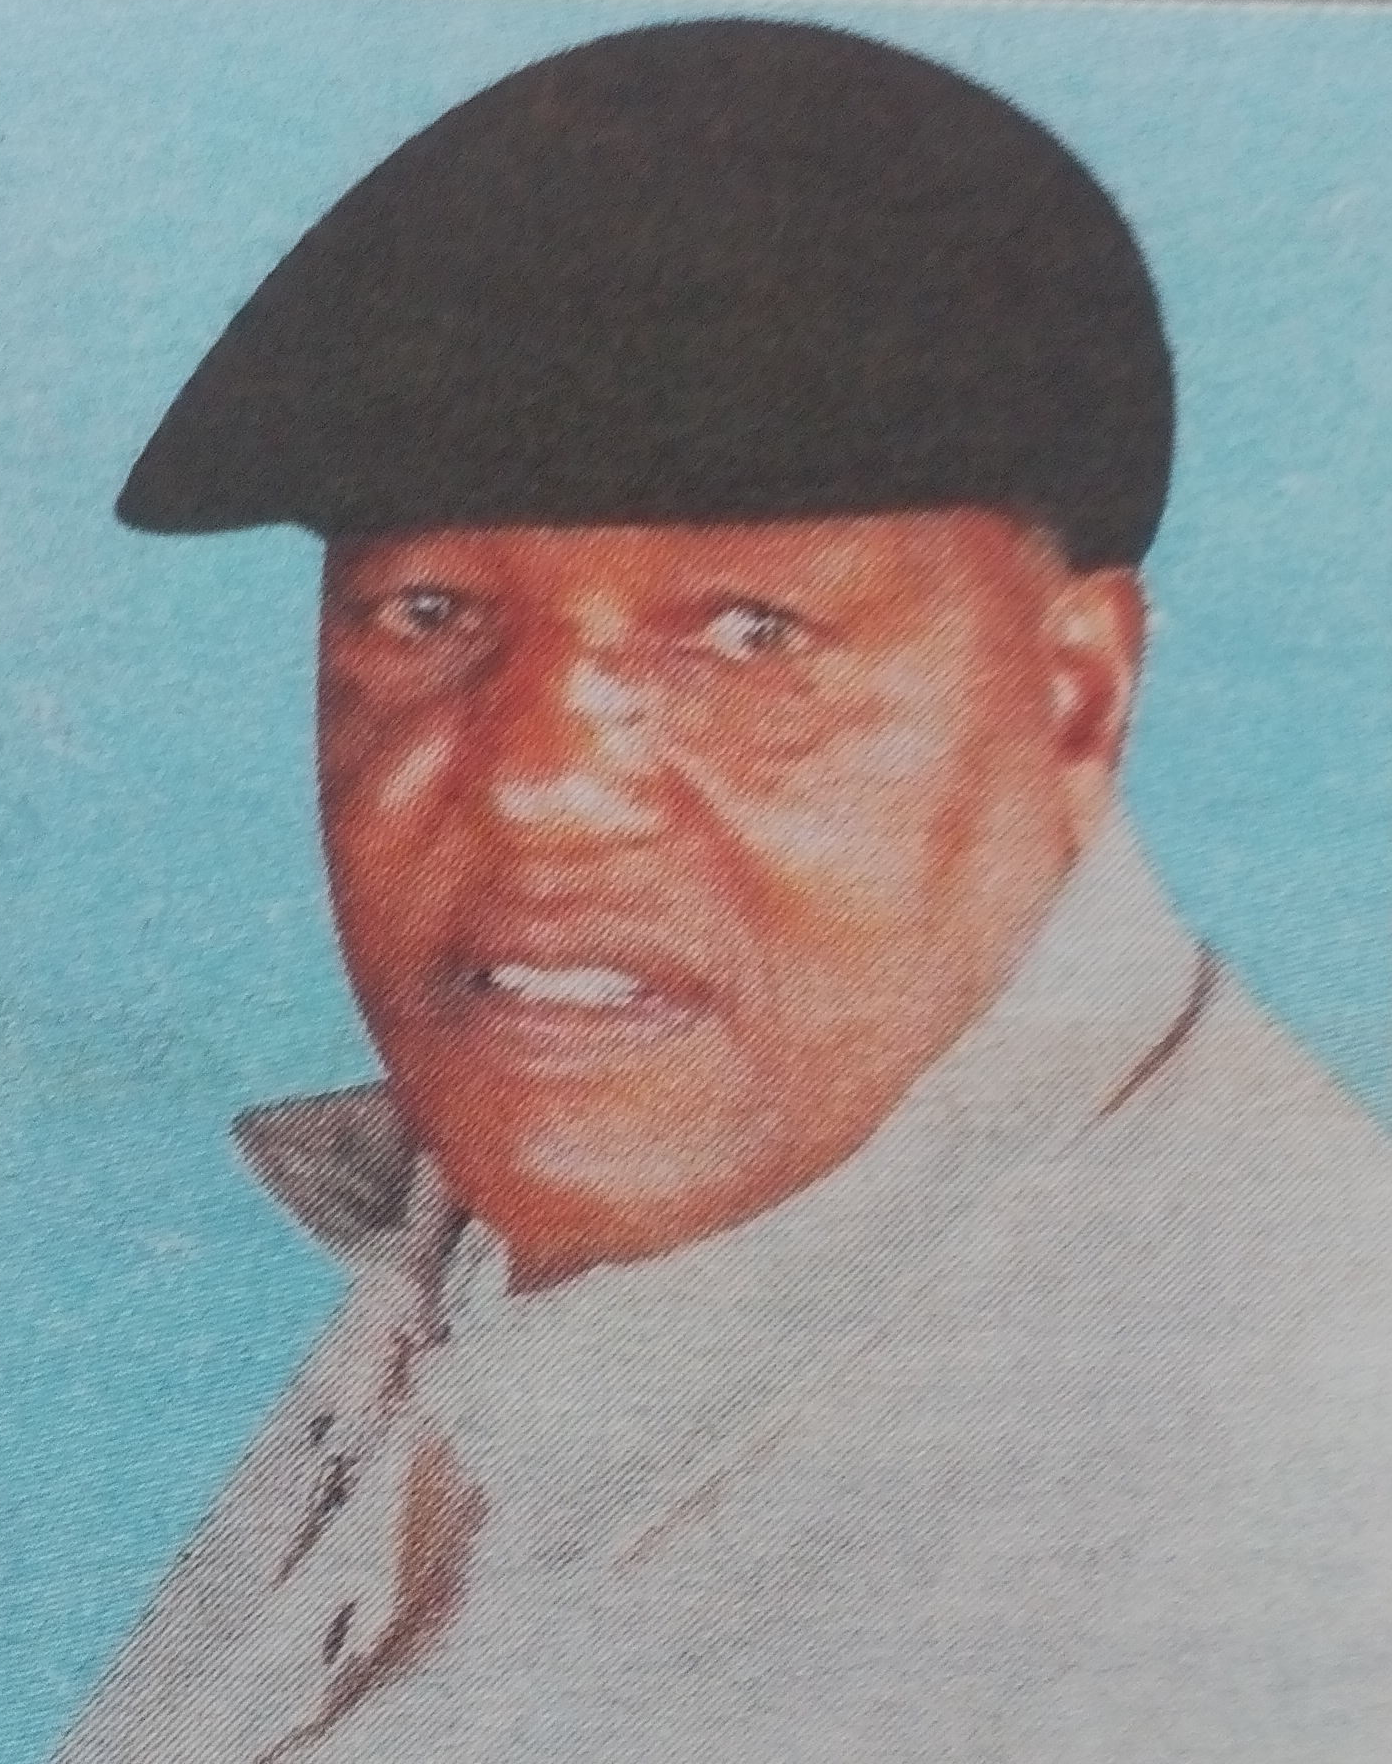 Obituary Image of George Kimani Kageche